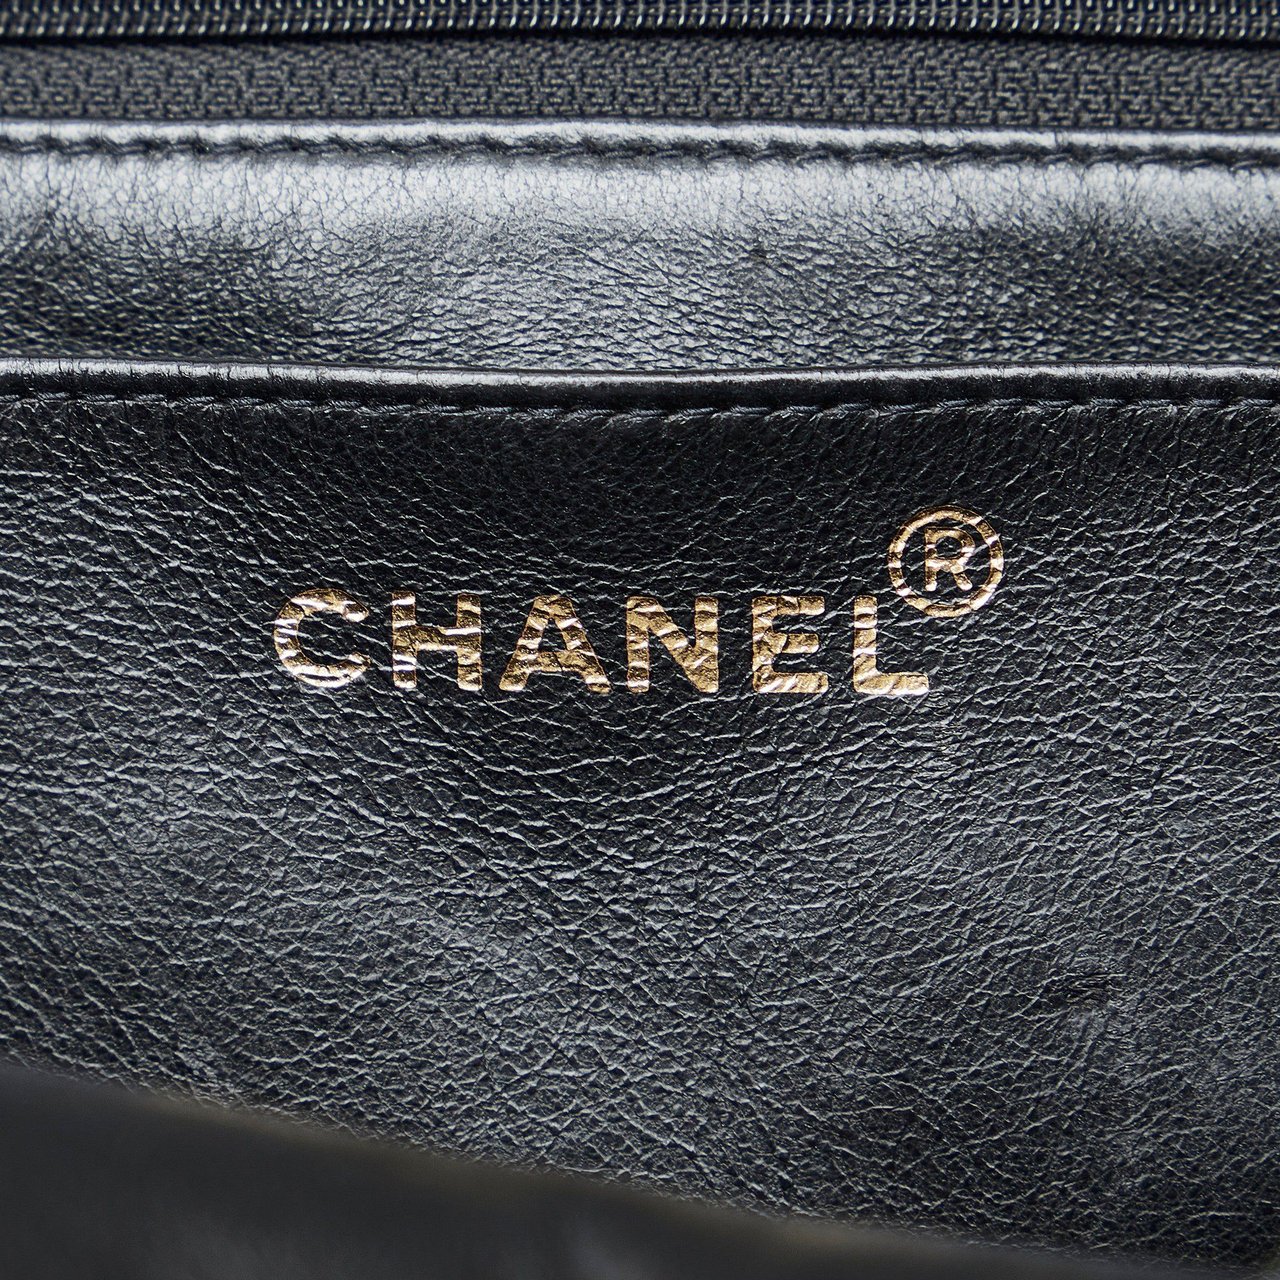 Chanel Maxi Logo Printed CC Matelasse Flap Bag Zwart